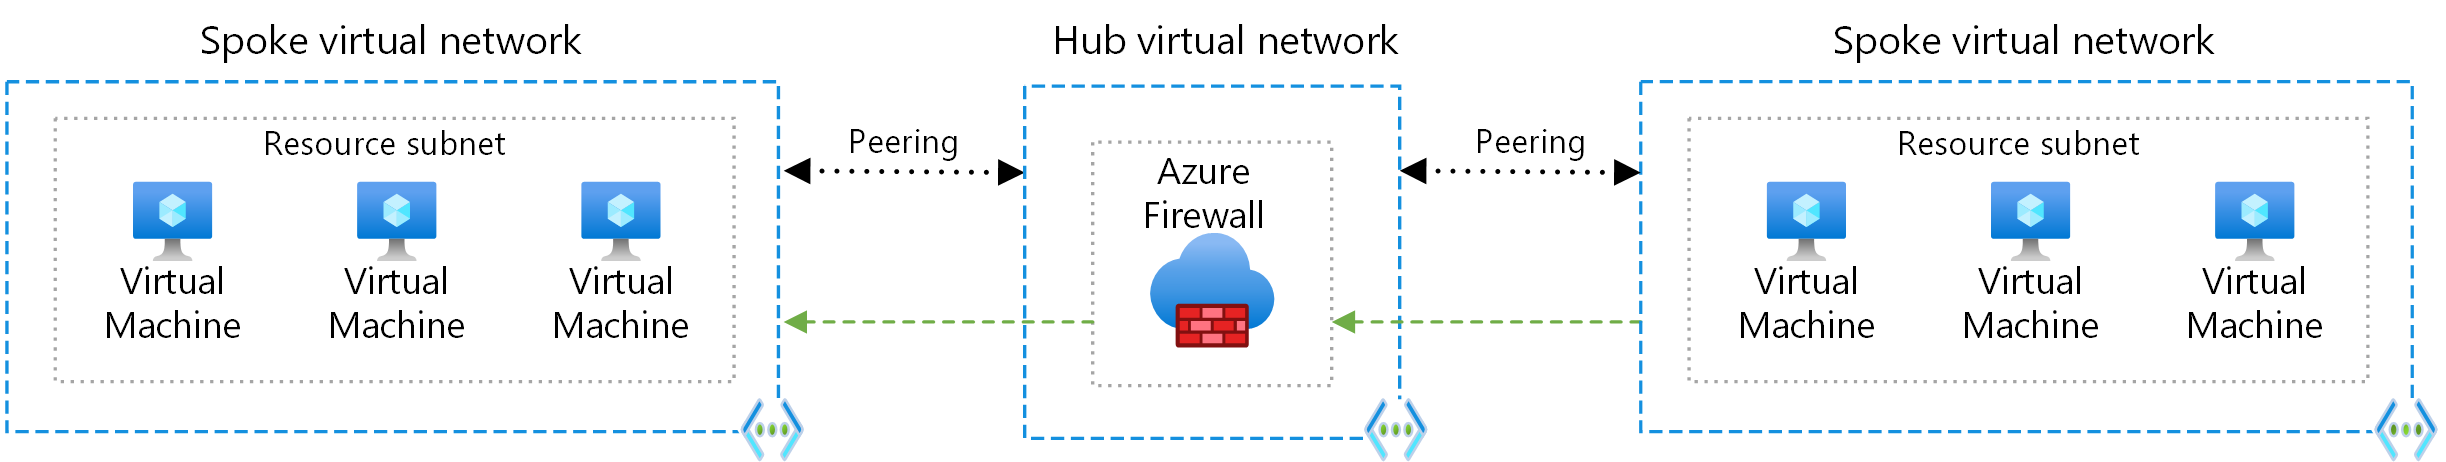 Azure Firewall を使用したスポーク間のルーティングを示す図